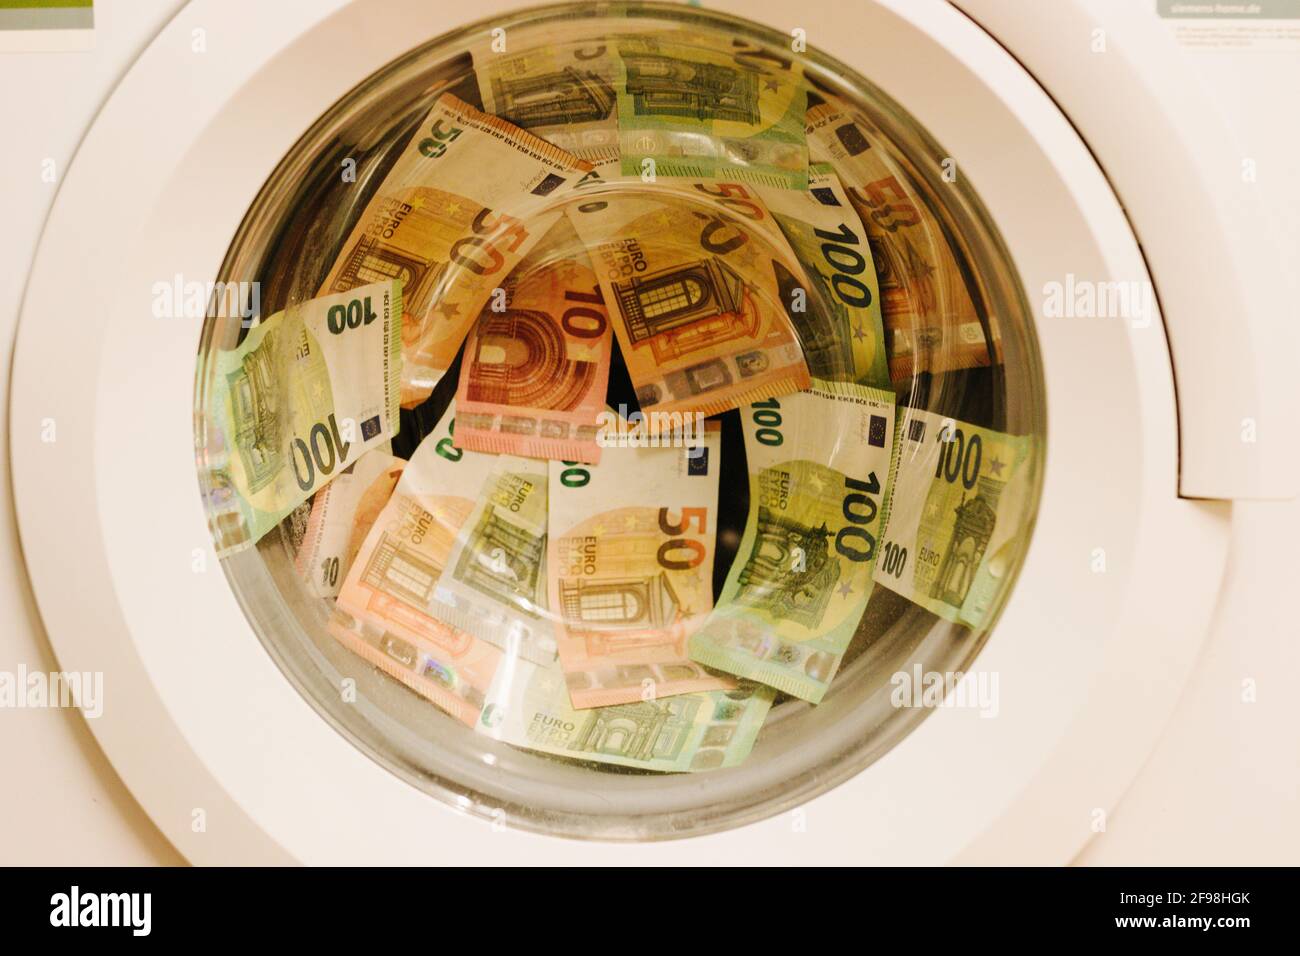 Money in washing machine, symbol money laundering Stock Photo - Alamy